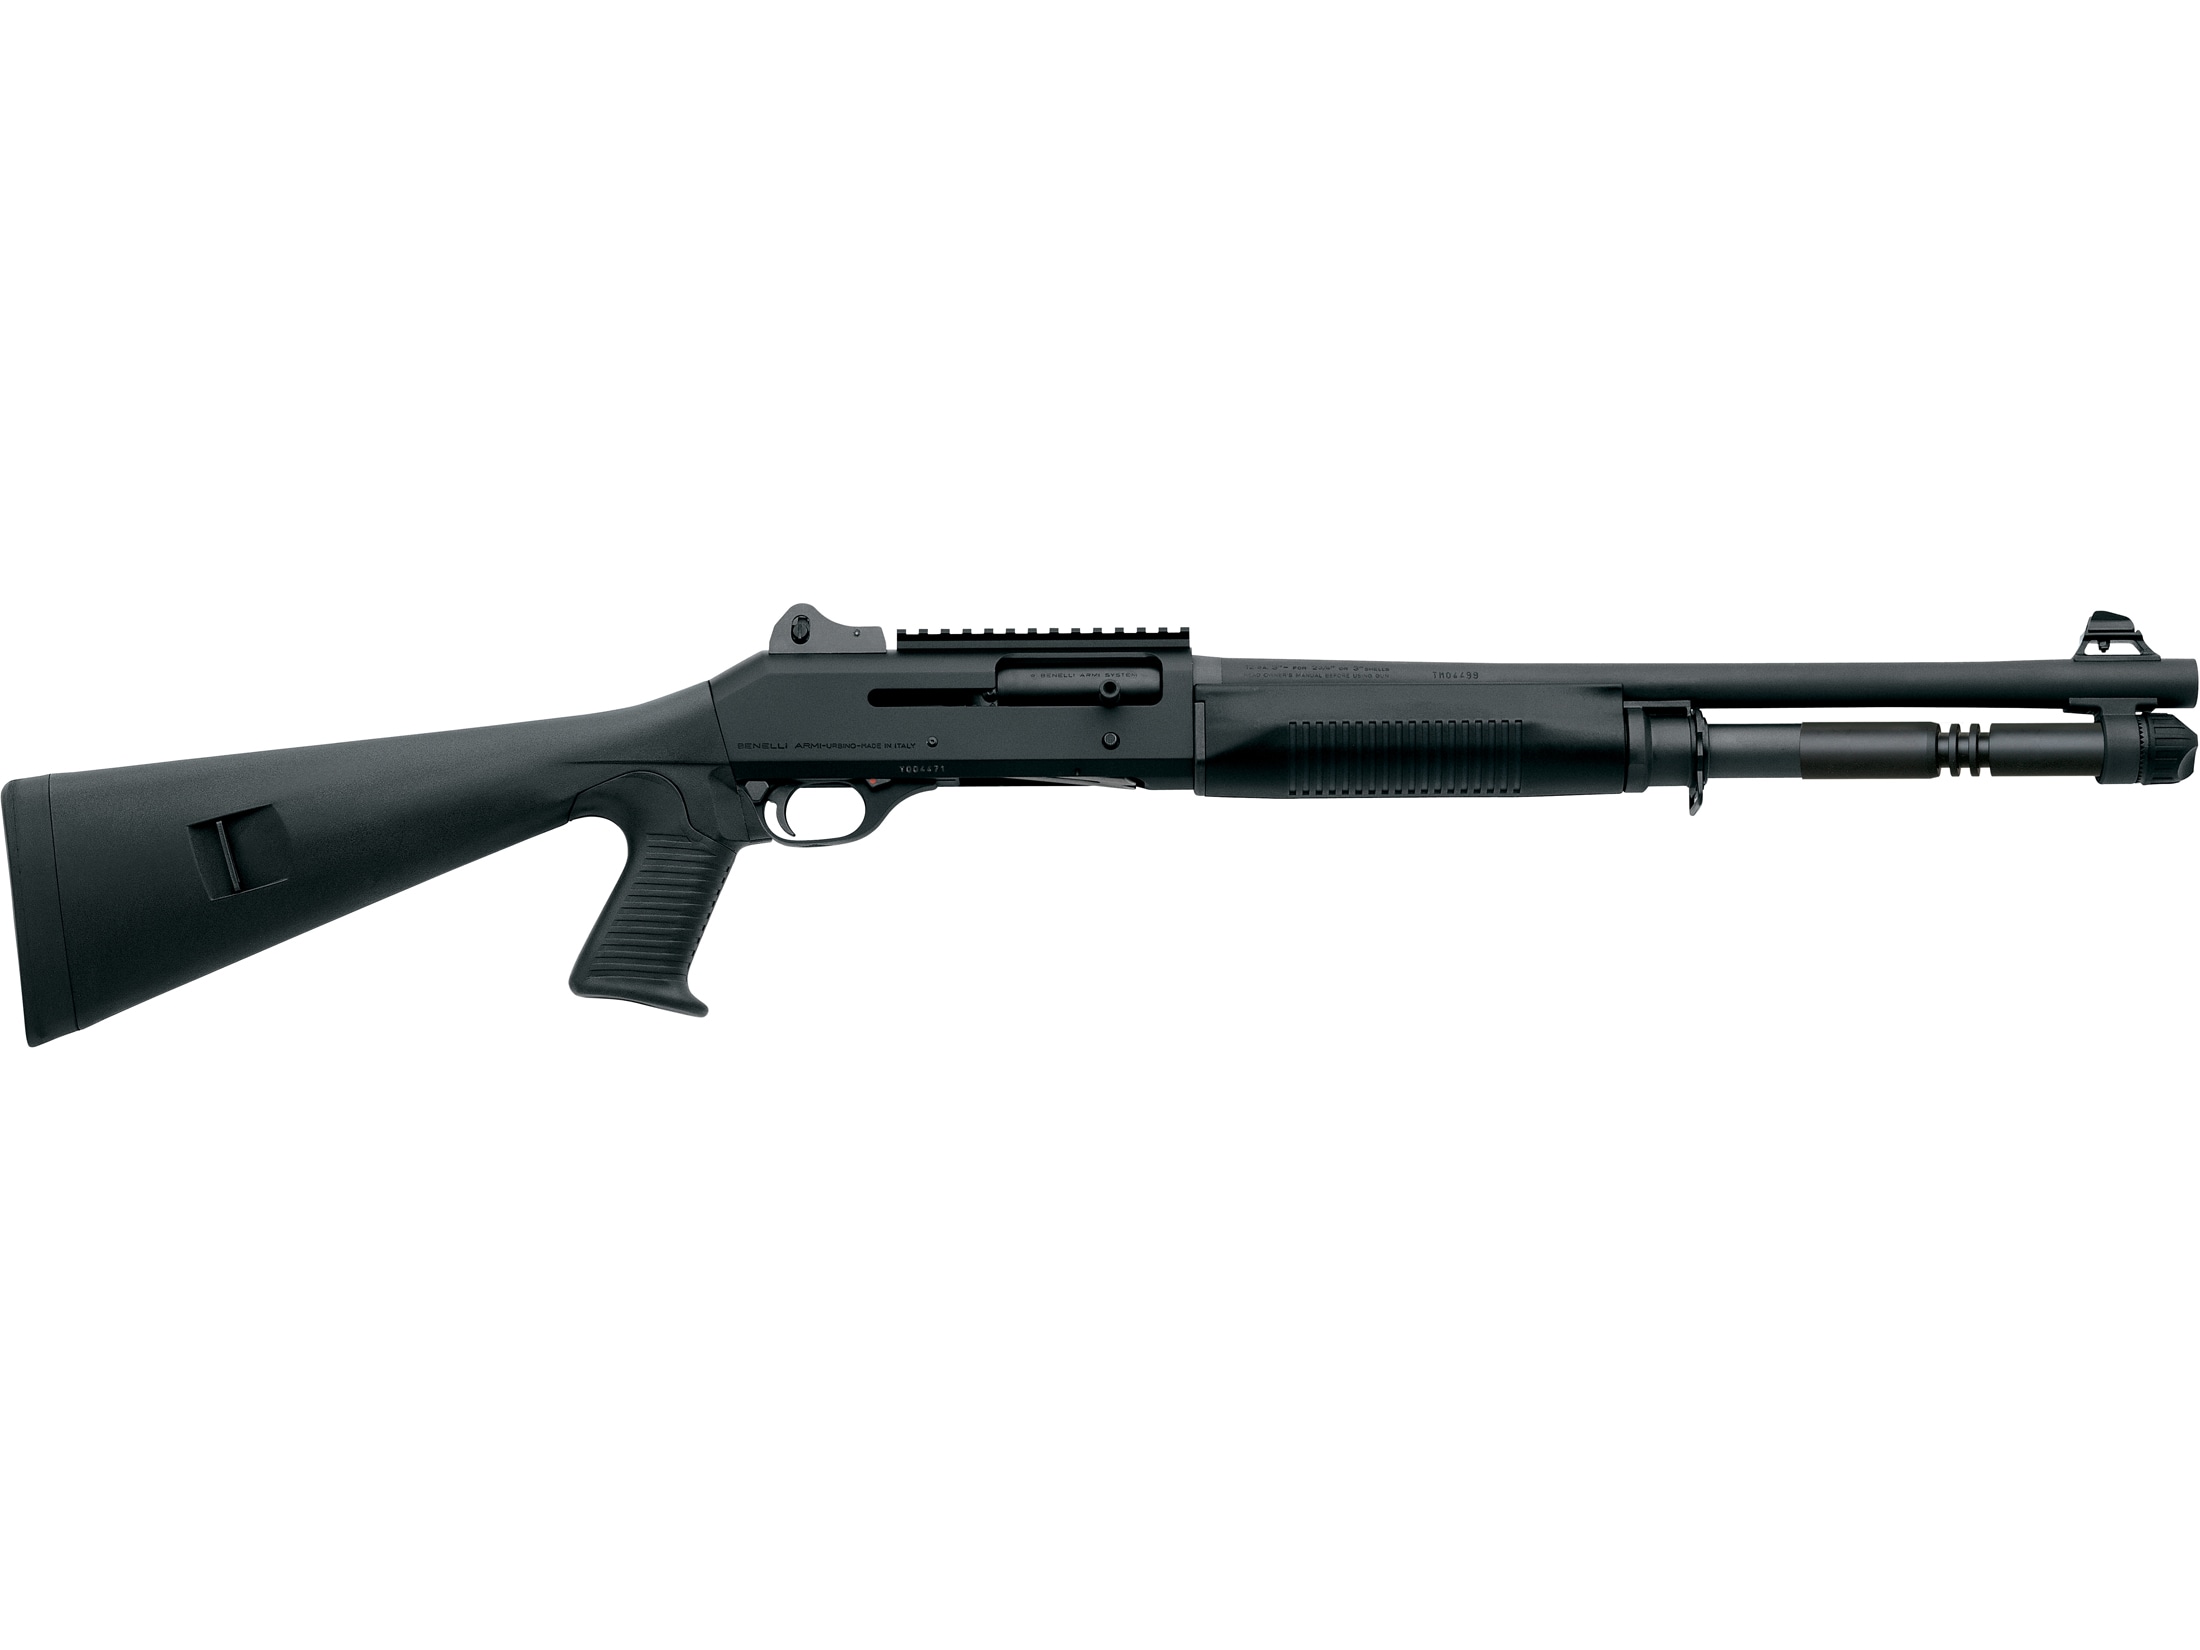 Benelli M4 Tactical 12 Gauge Semi-Automatic Shotgun In Stock Now | Don't Miss Out | tacticalfirearmsandarchery.com